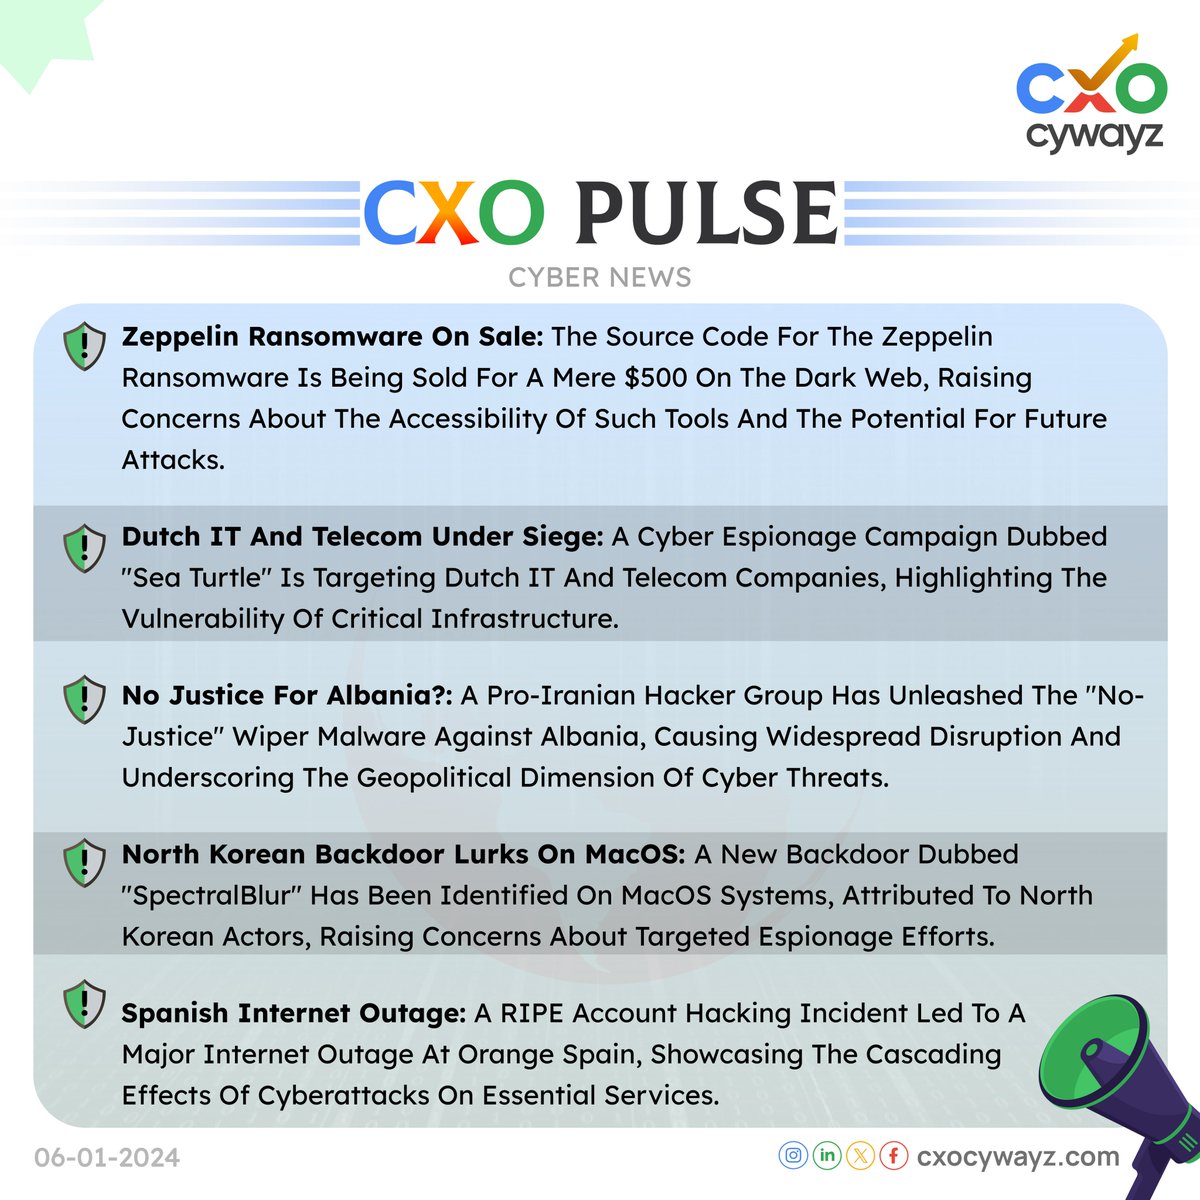 CXO PULSE Cyber News Headlines🚨

#cxopulse #cxocywayz #darkwebnews #zeppelin #cyberthreat #macOS #INTERNET #ciso #seaturtles #dutch